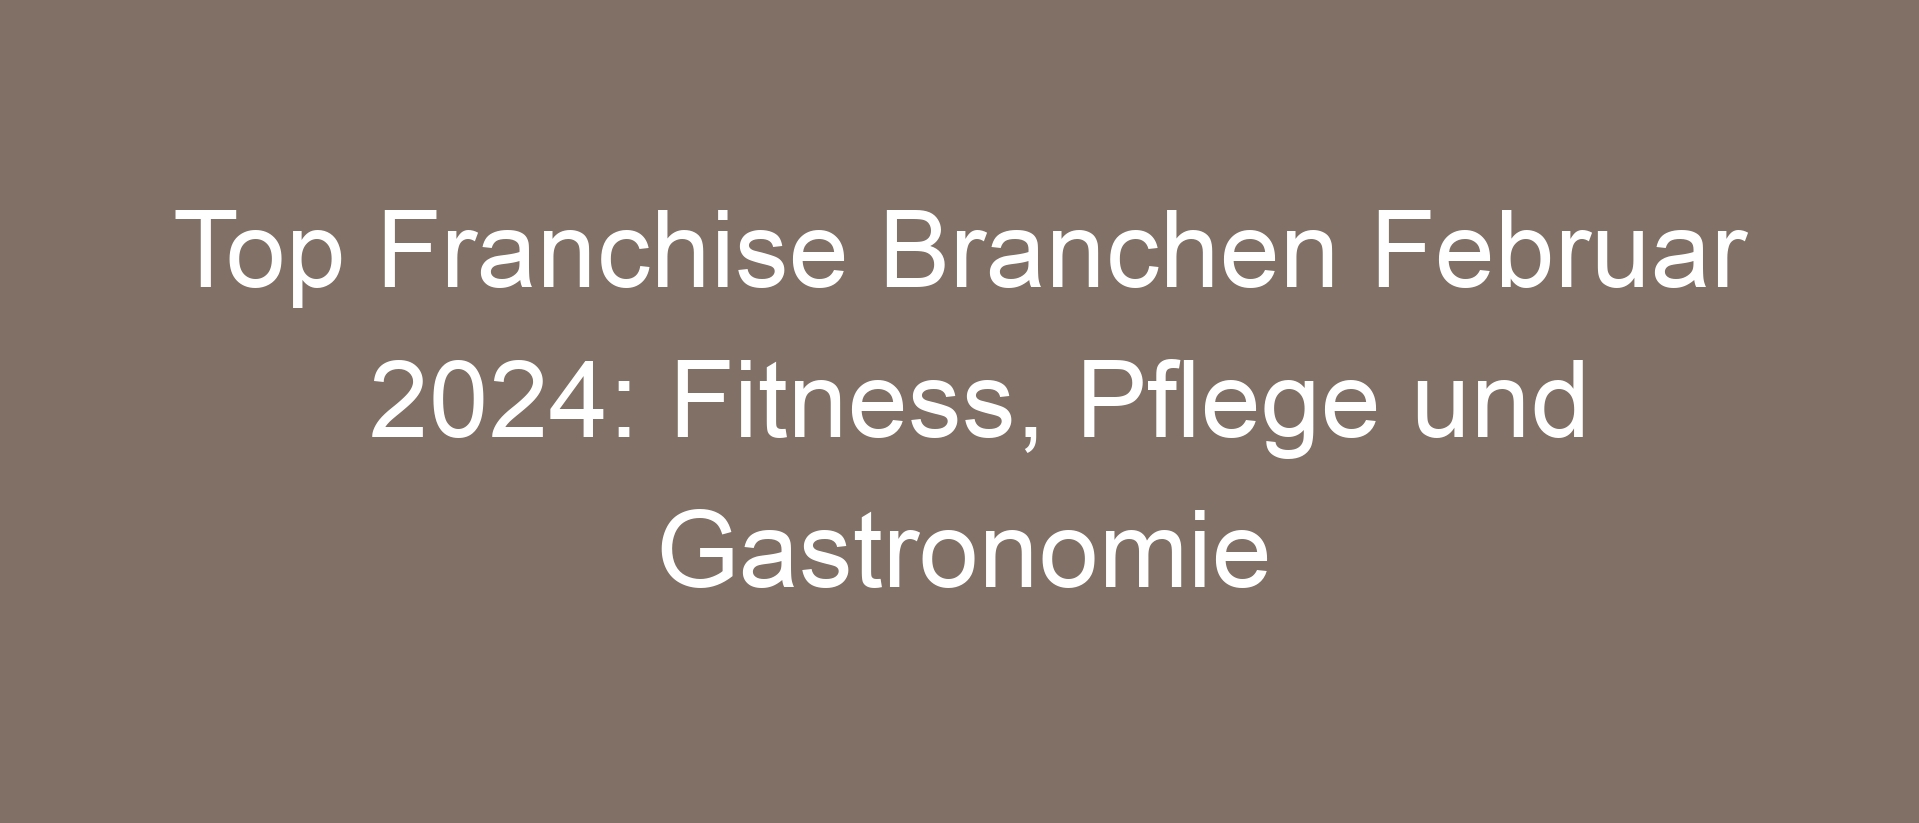 Top Franchise Branchen Februar 2024: Fitness, Pflege und Gastronomie